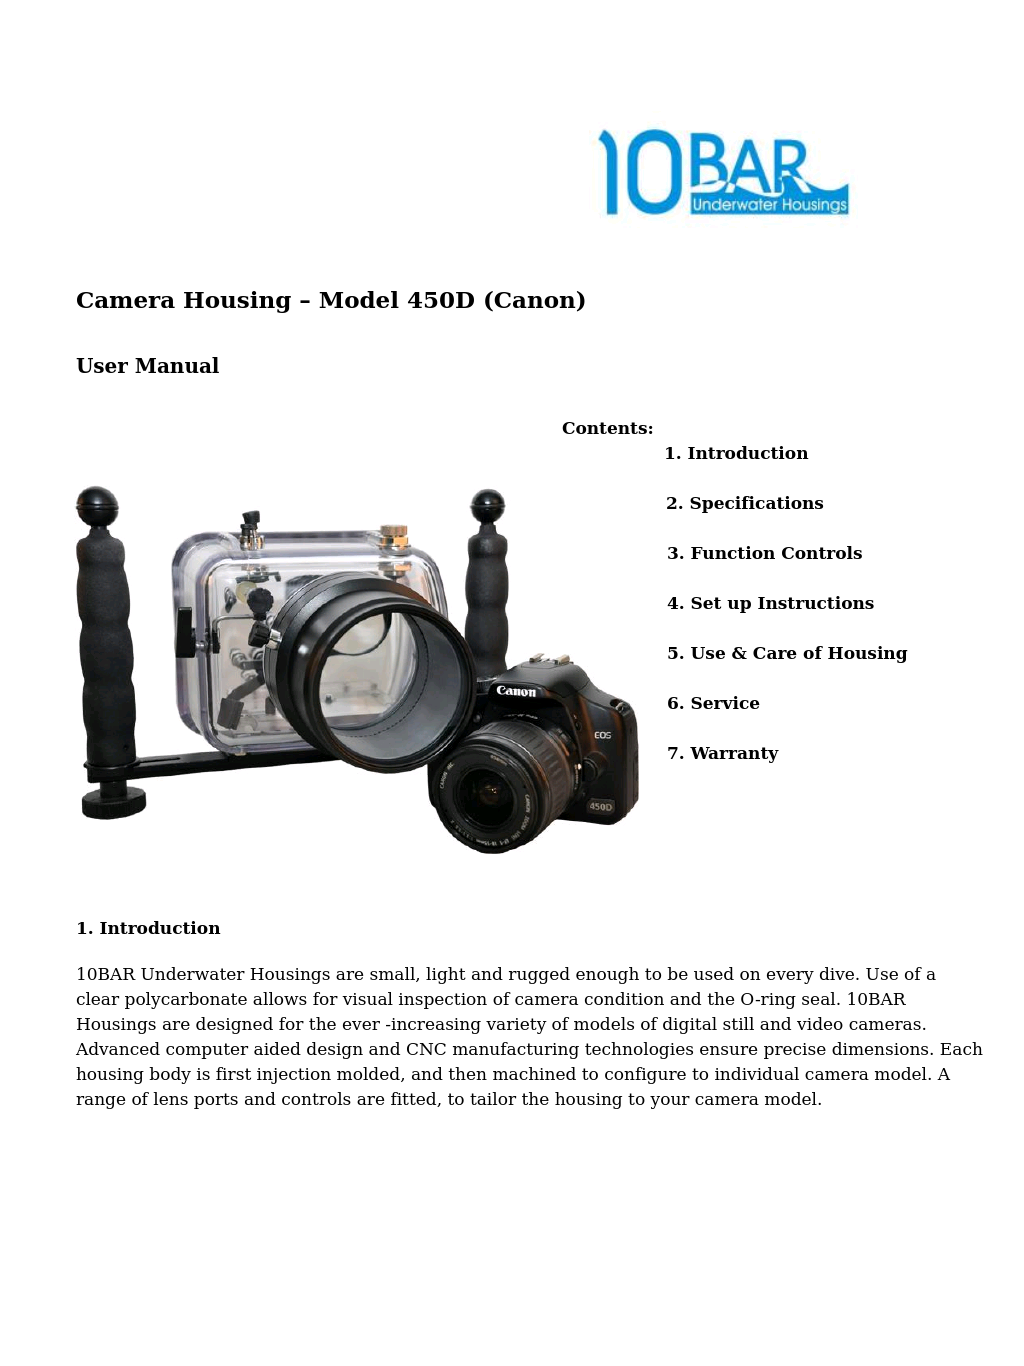 Camera Housing for Canon EOS 450D